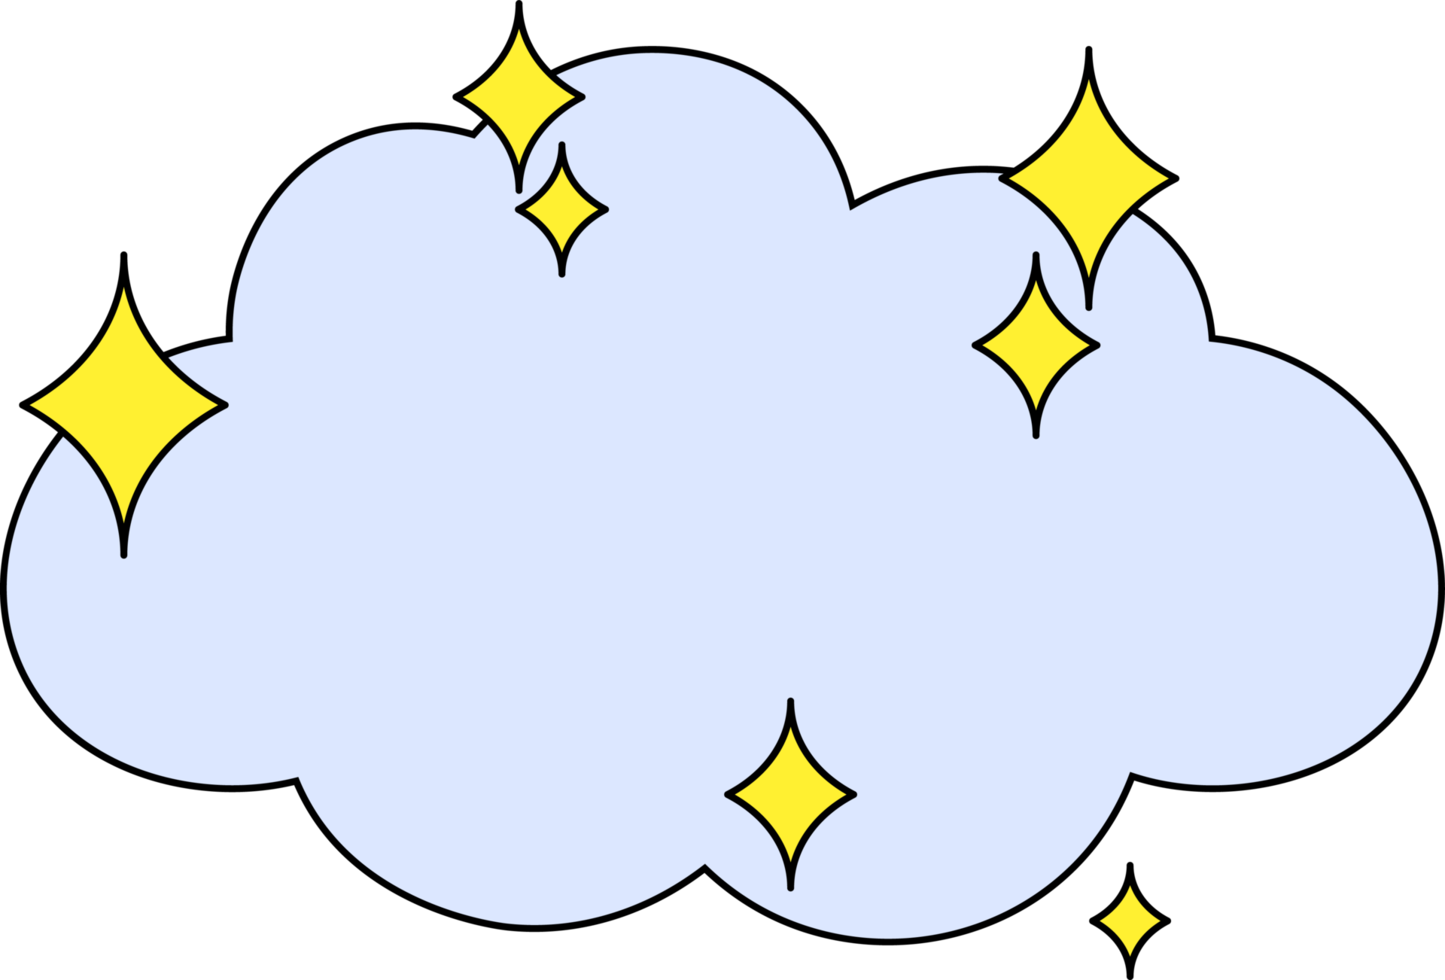 cloud design illustration isolated on transparent background png